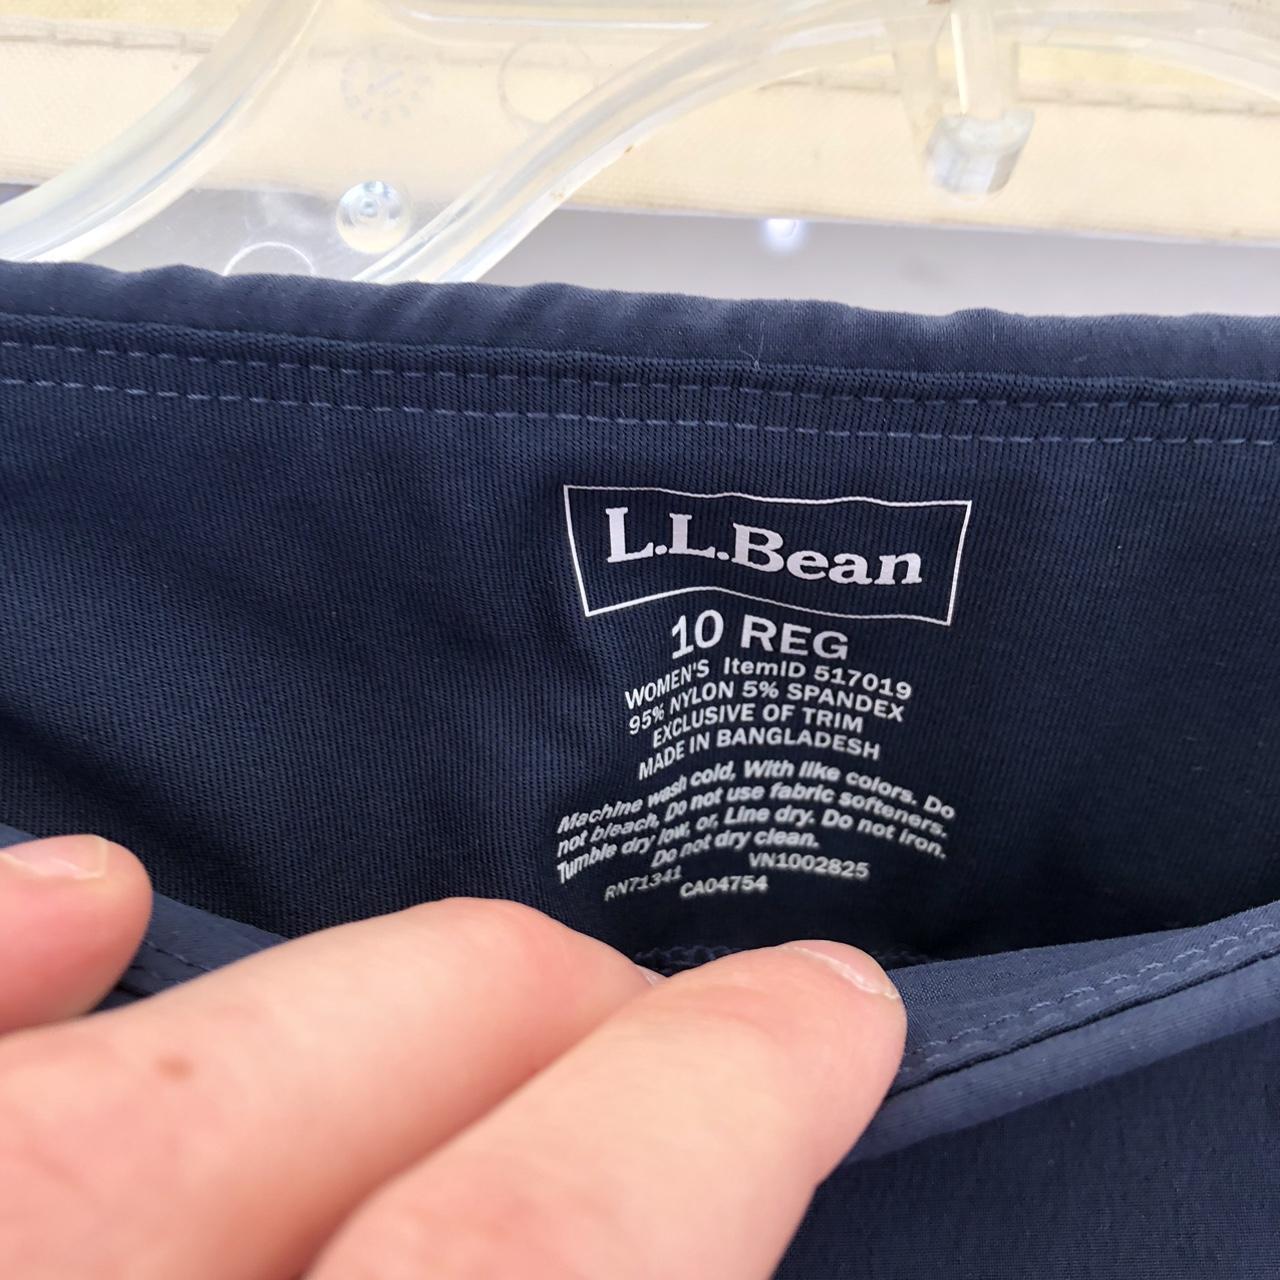 Women's Encompass Travel Pants, Mid-Rise Tapered-Leg at L.L. Bean